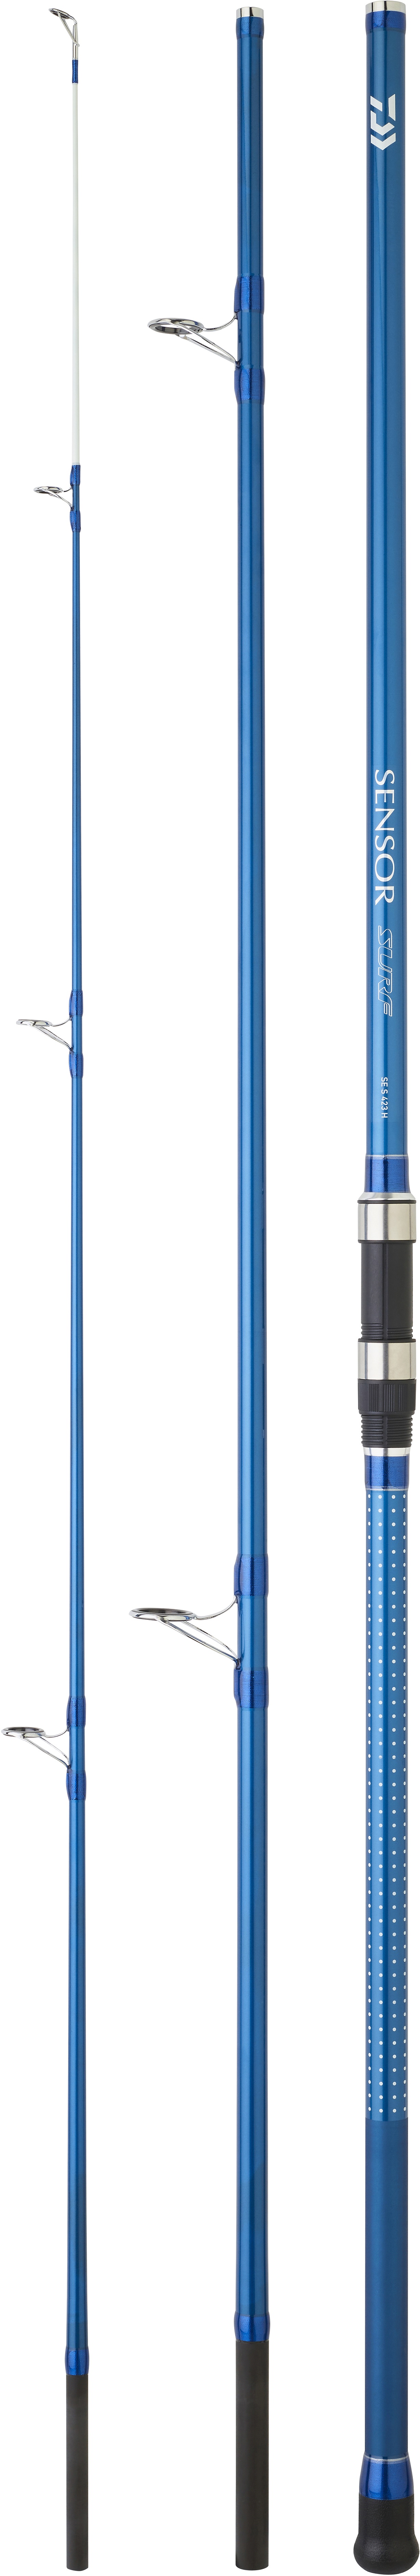 Daiwa Sensor Surf Beach Rod 4.2m (100-200g) (3 pieces)